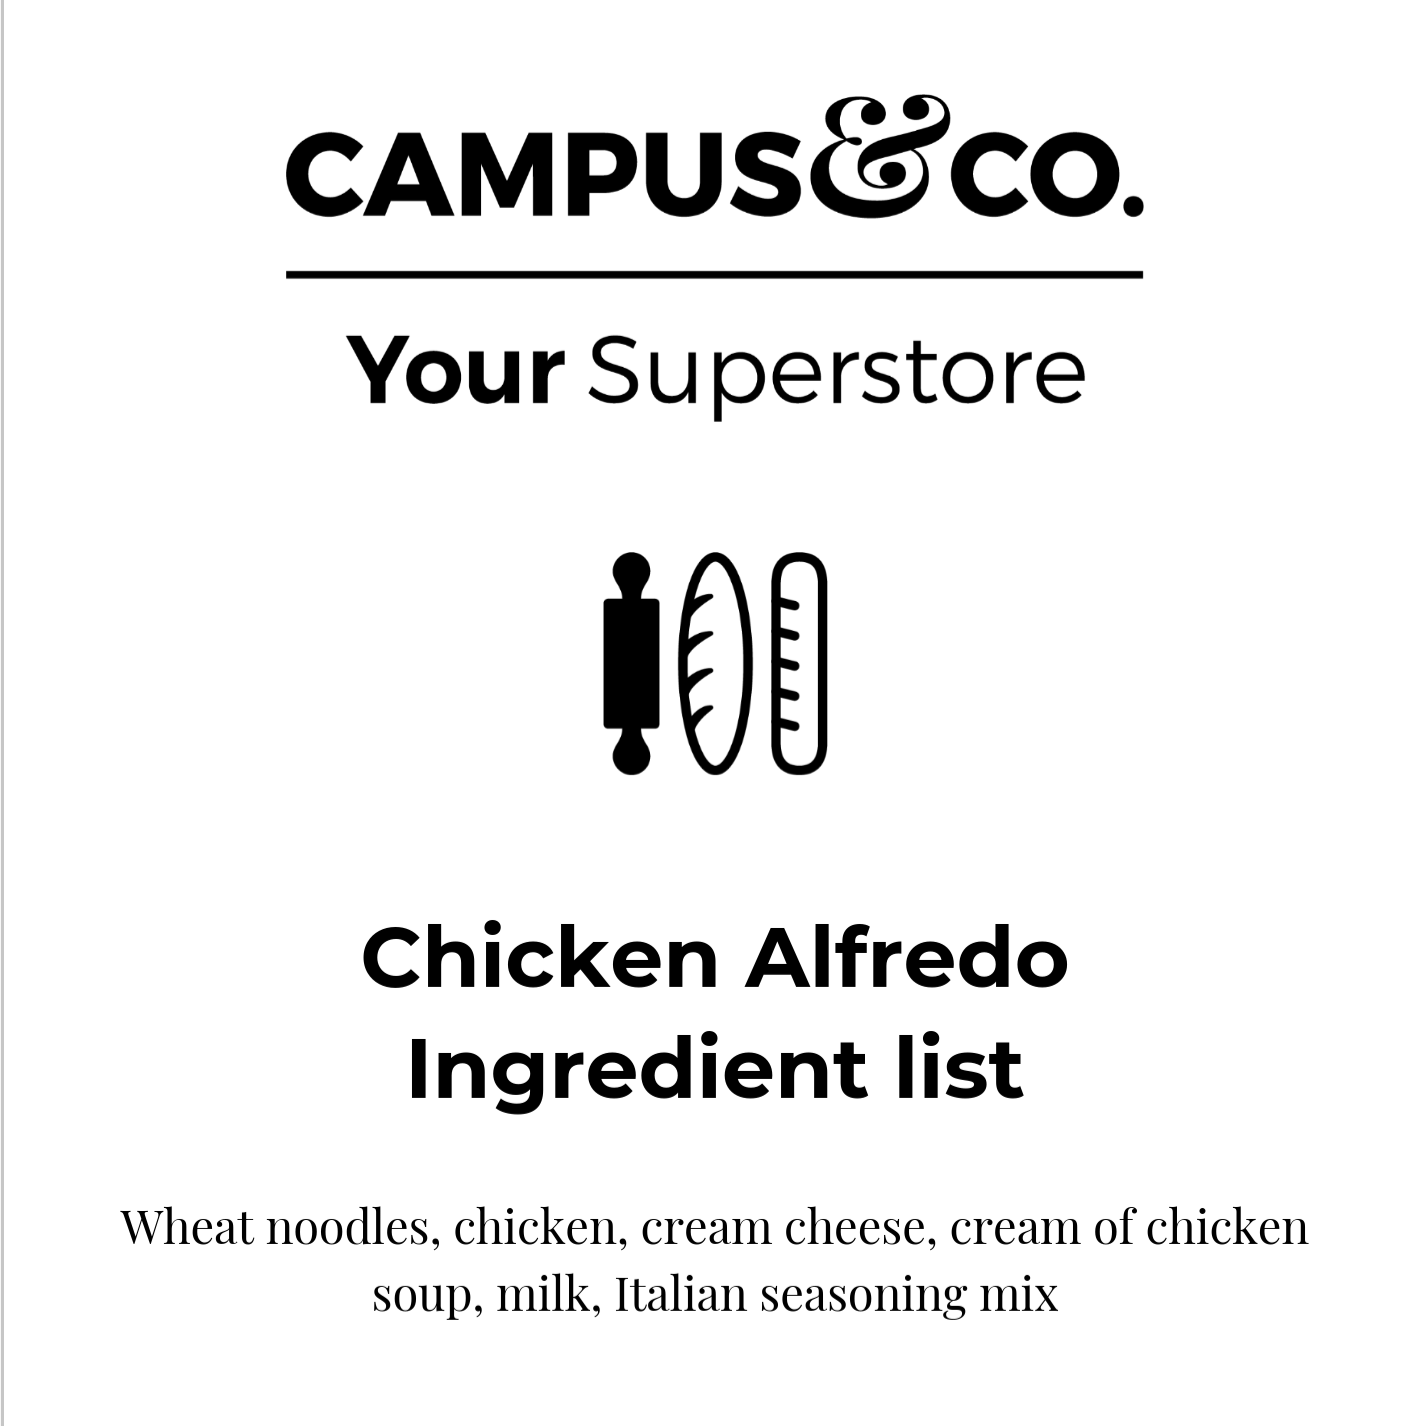 Campus & Co. Chicken Fettuccine Alfredo Bake, Serves 2-3